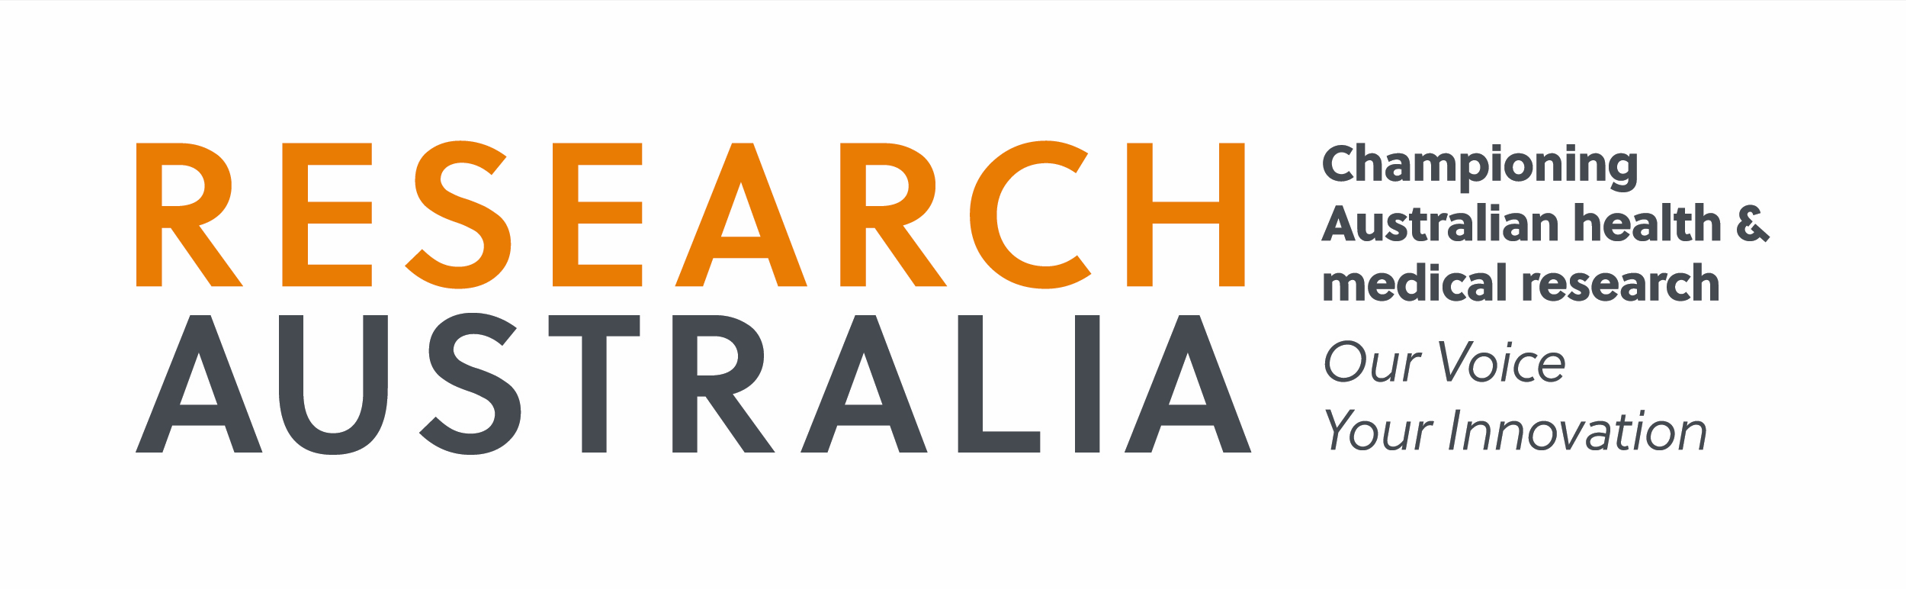 Research Australia logo